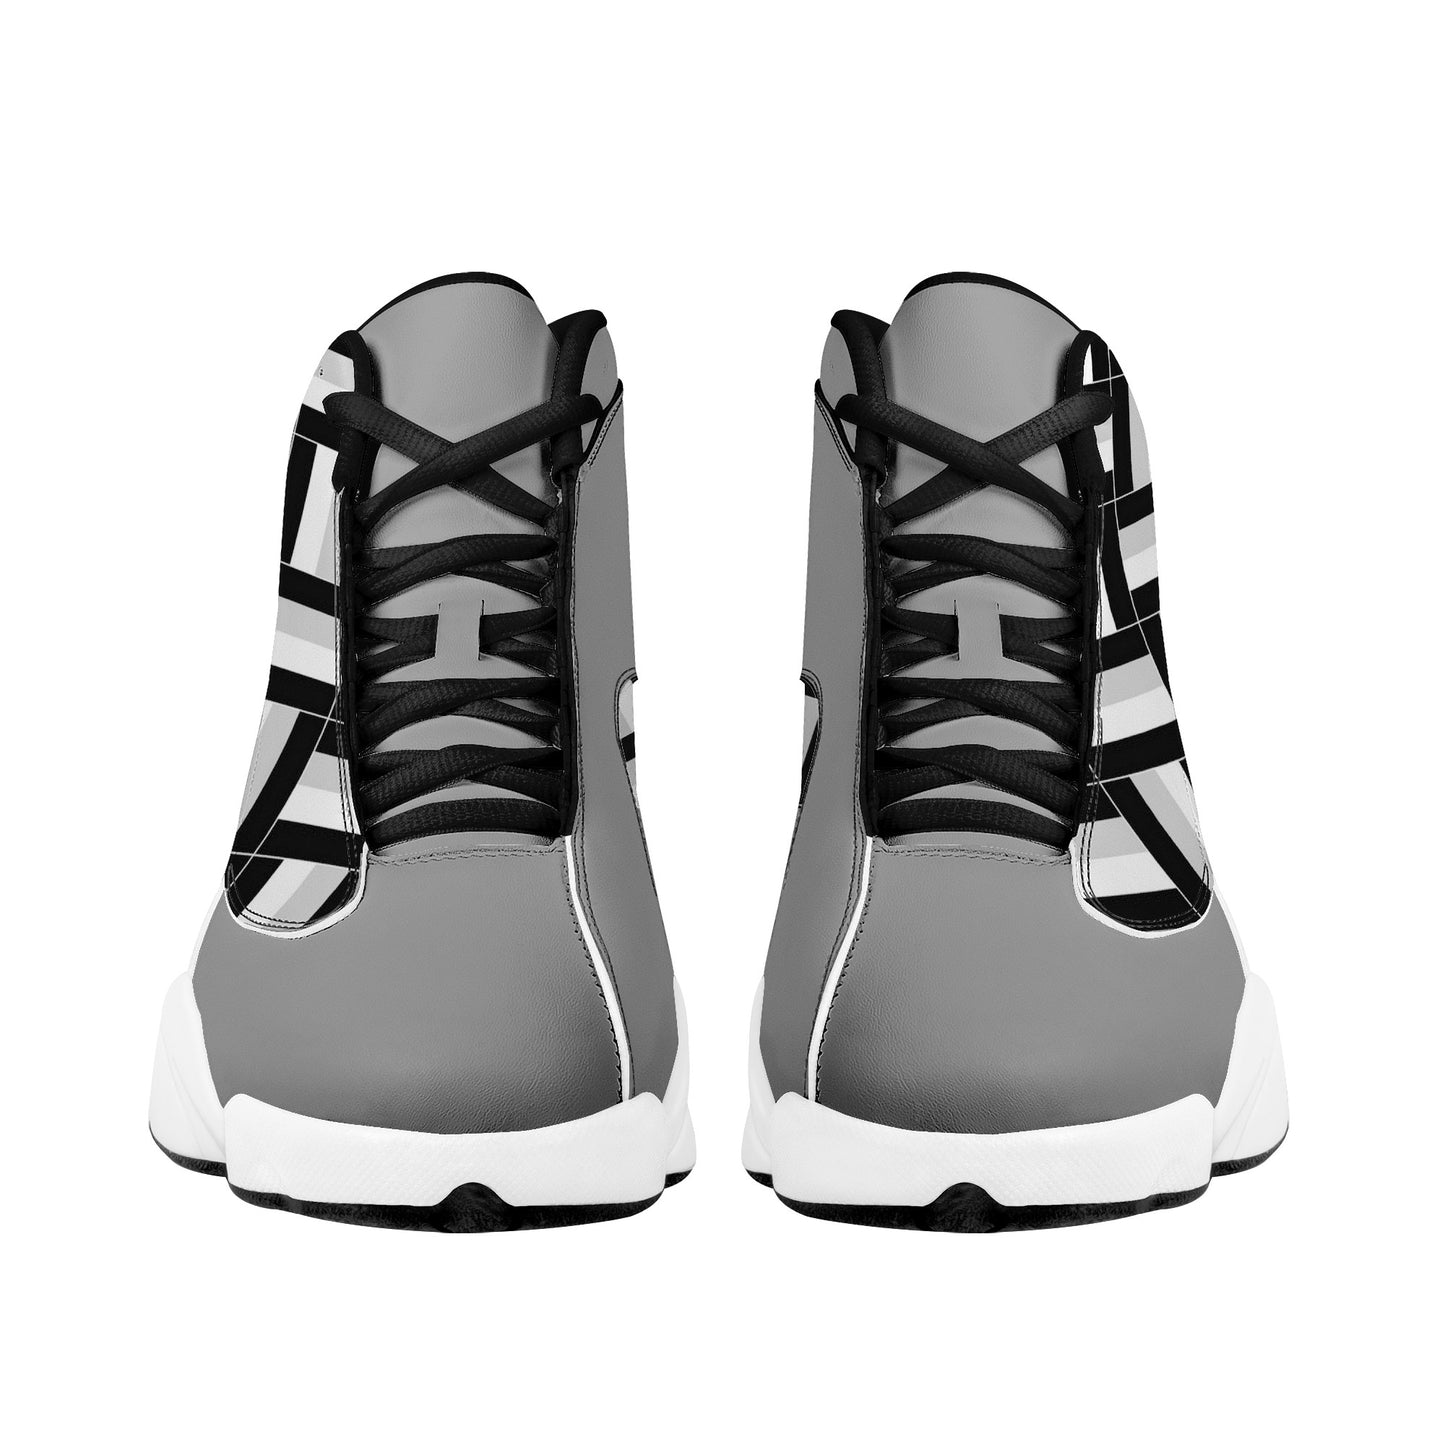 Basketball Shoes - Grey